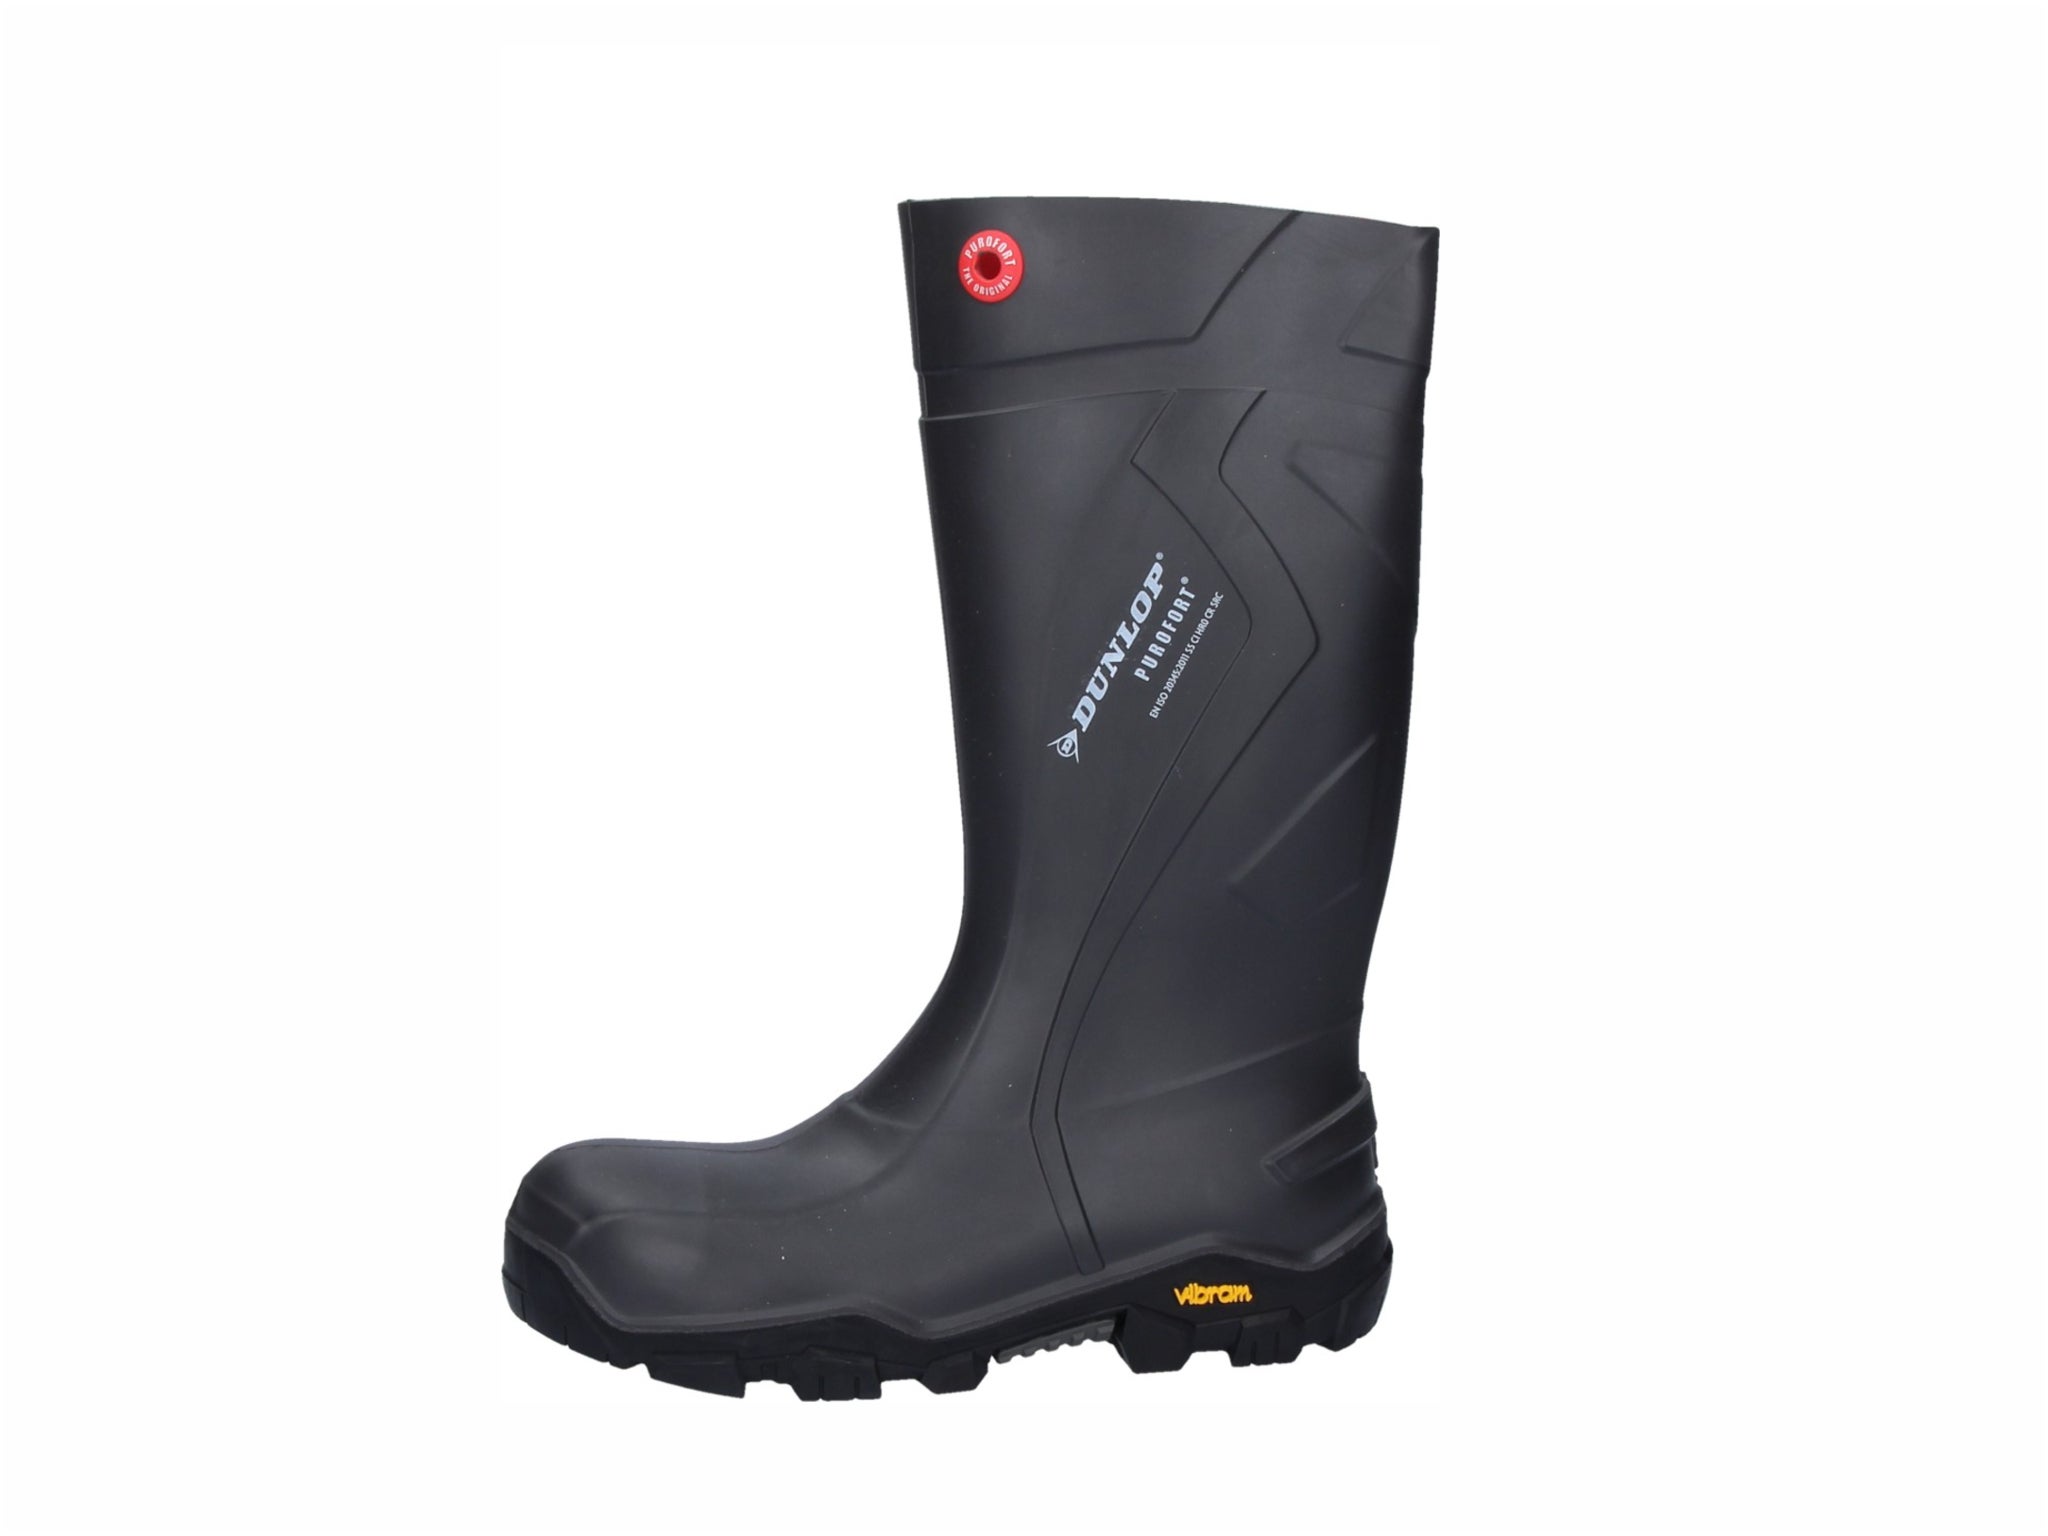 EU 47 UK 12, Green Dunlop Mens Waterproof Dog Walking Festival Rain Snow Pricemaster Wellies Wellington Boots Sizes UK 6-13